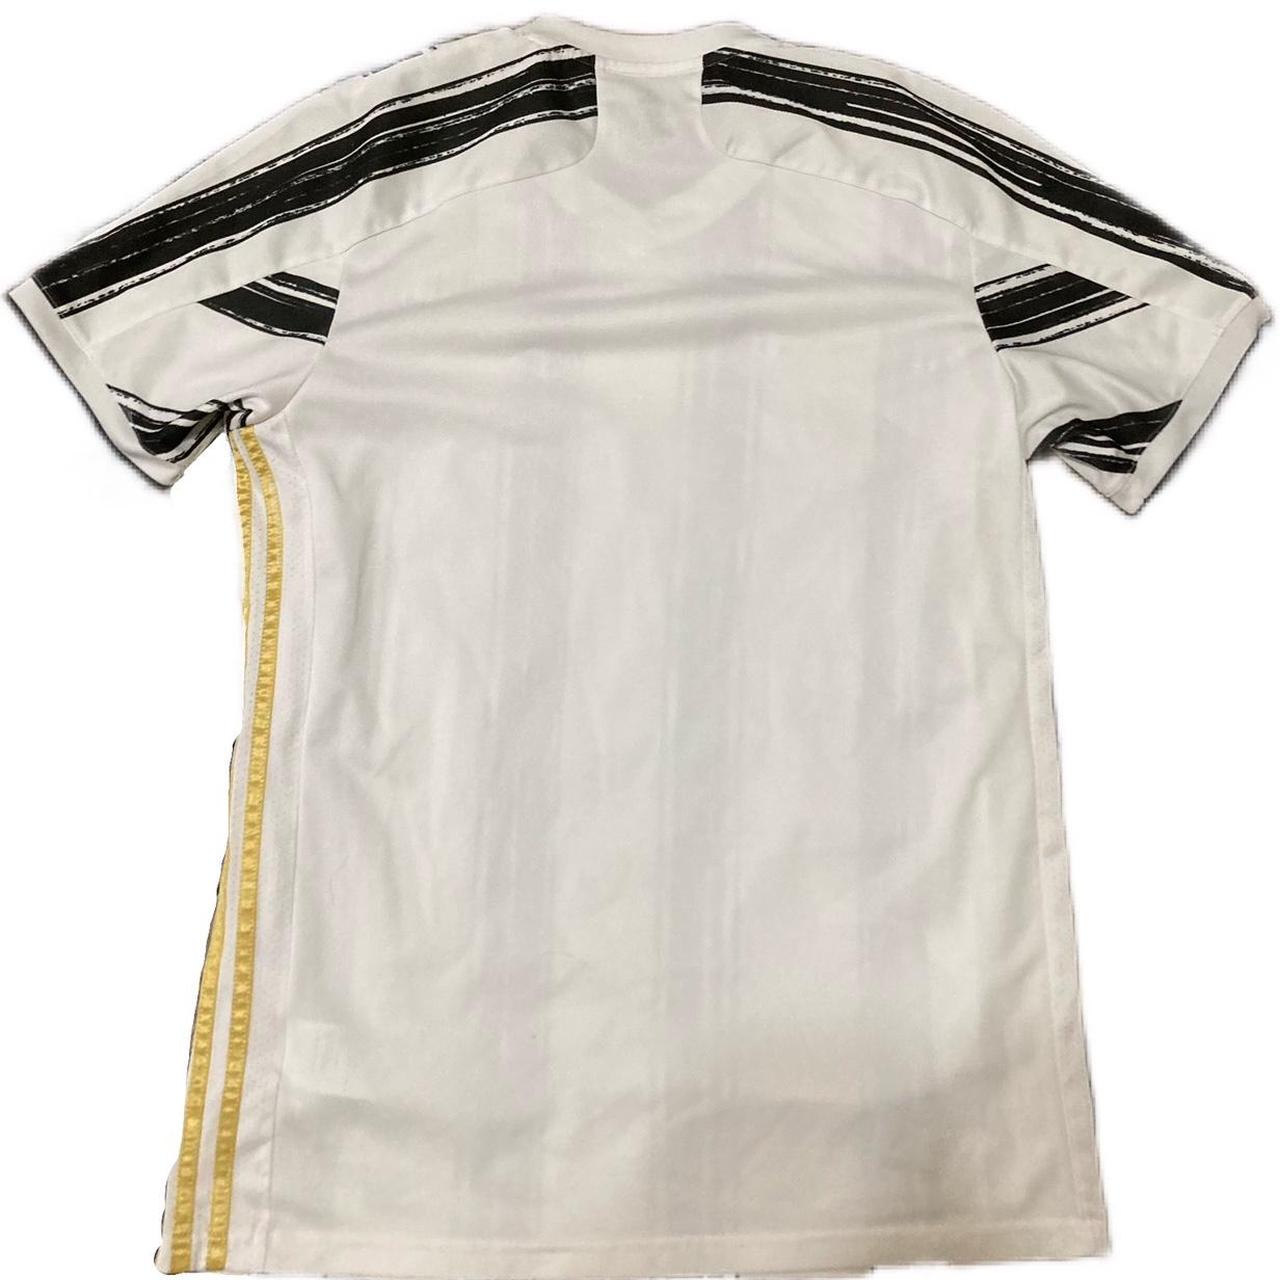 Adidas Men's Black and White T-shirt (2)